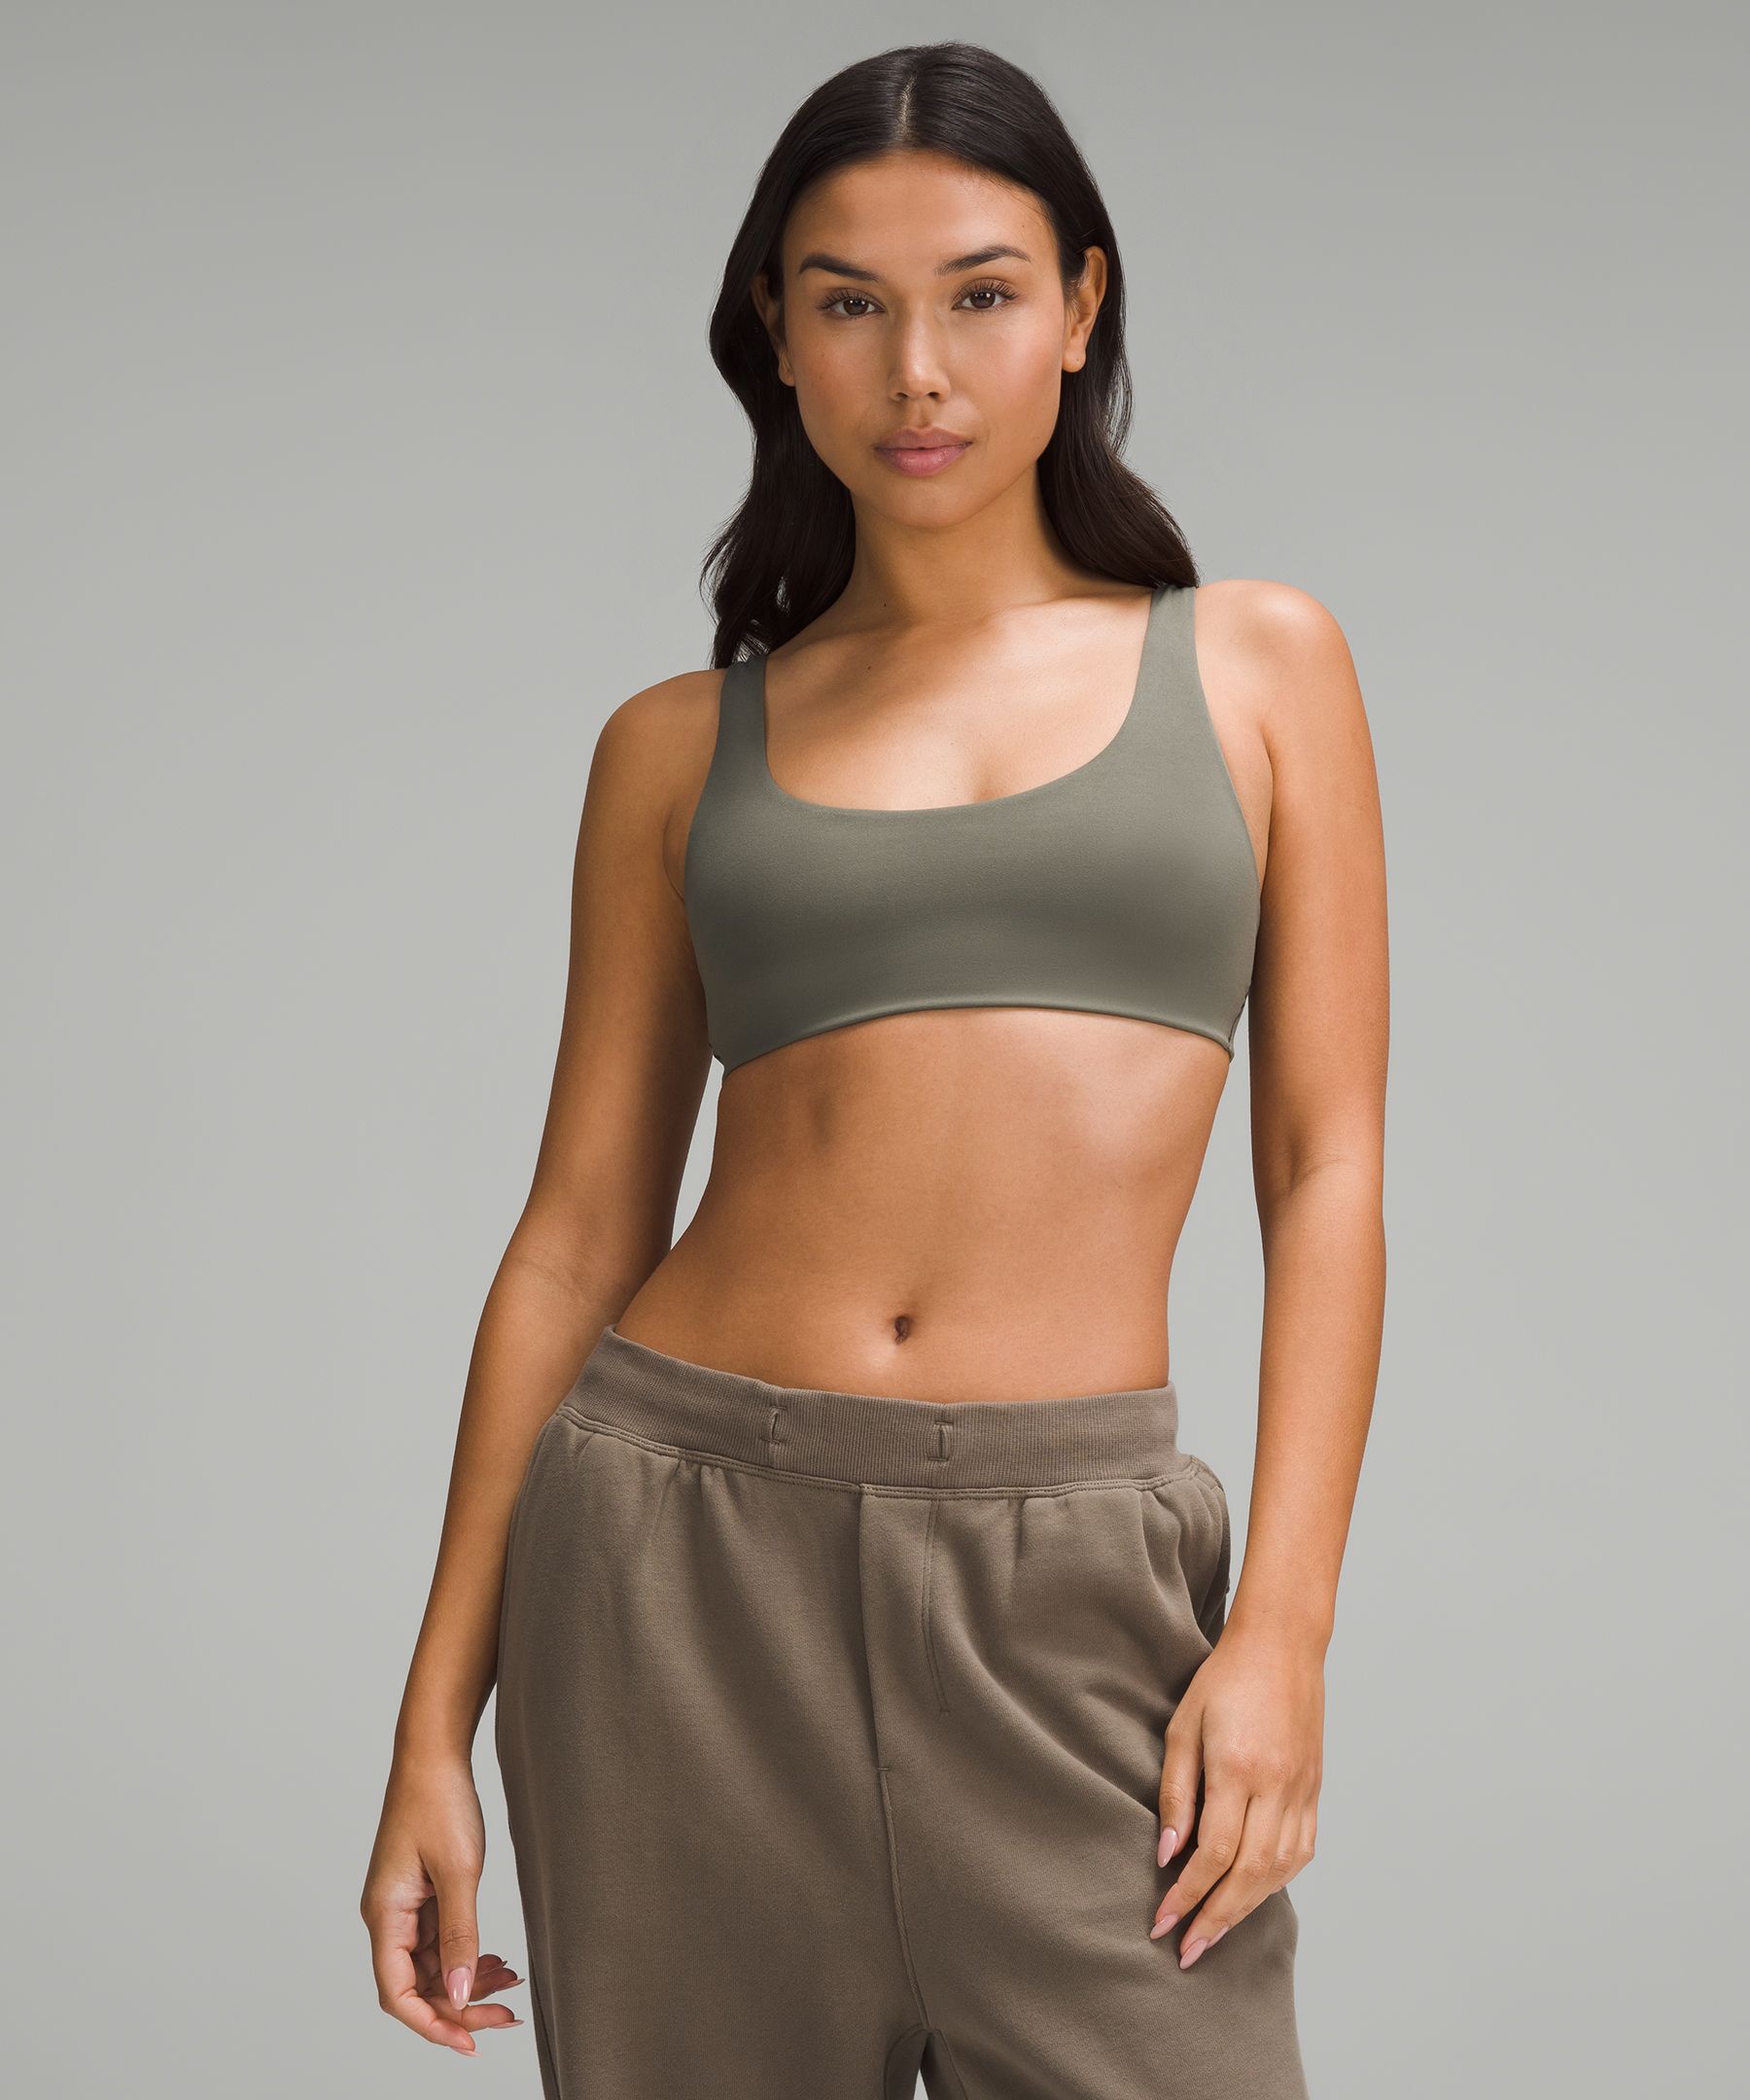 Lululemon sports bra size 10 Size M - $21 - From Araceli